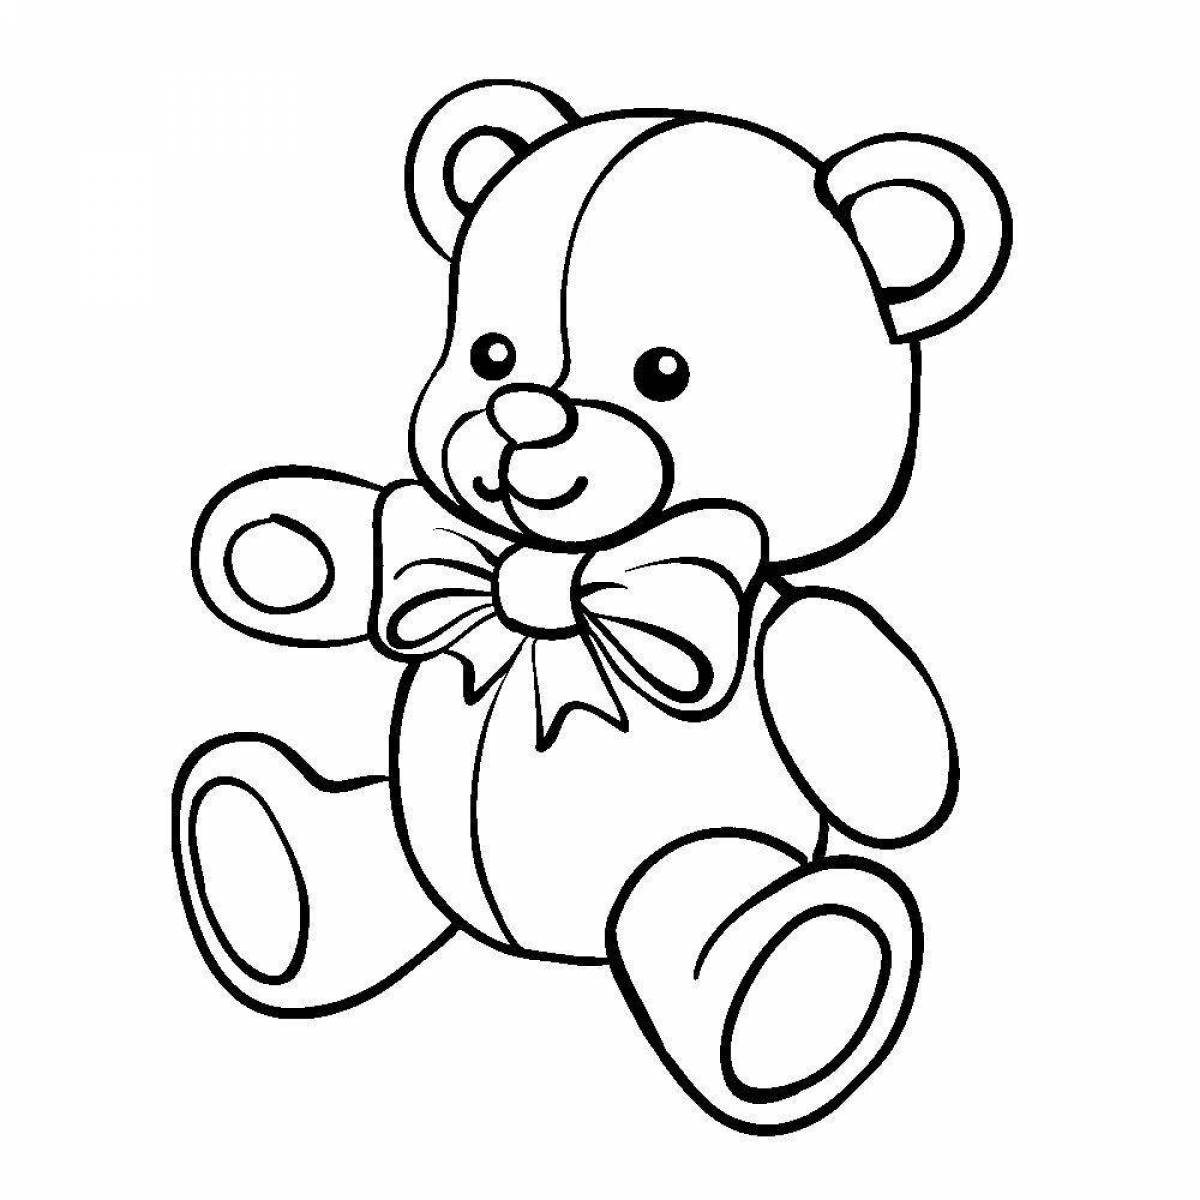 Adorable teddy bear pattern for kids